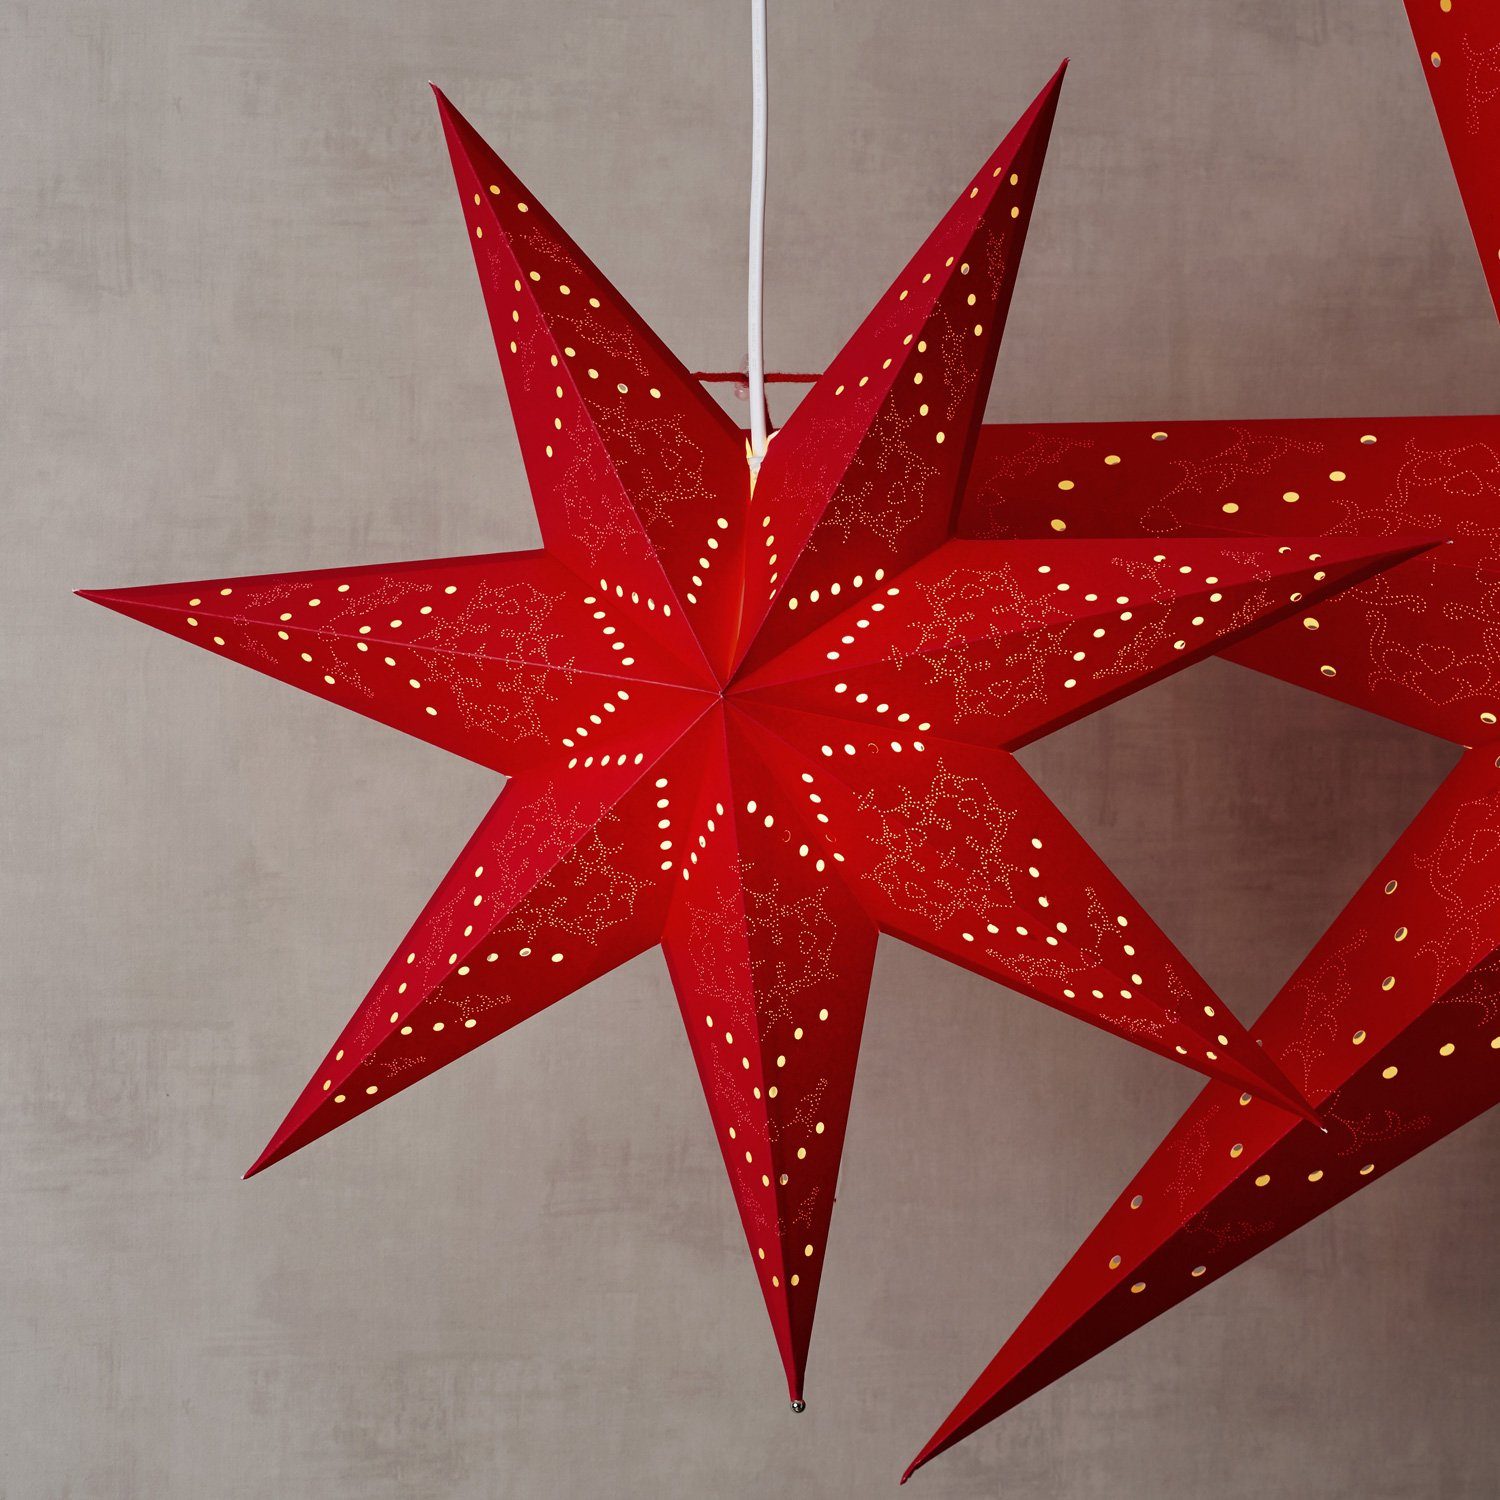 LED 51cm hängend 7-zackig Kabel Papierstern TRADING Stern Leuchtstern Faltstern STAR rot mit